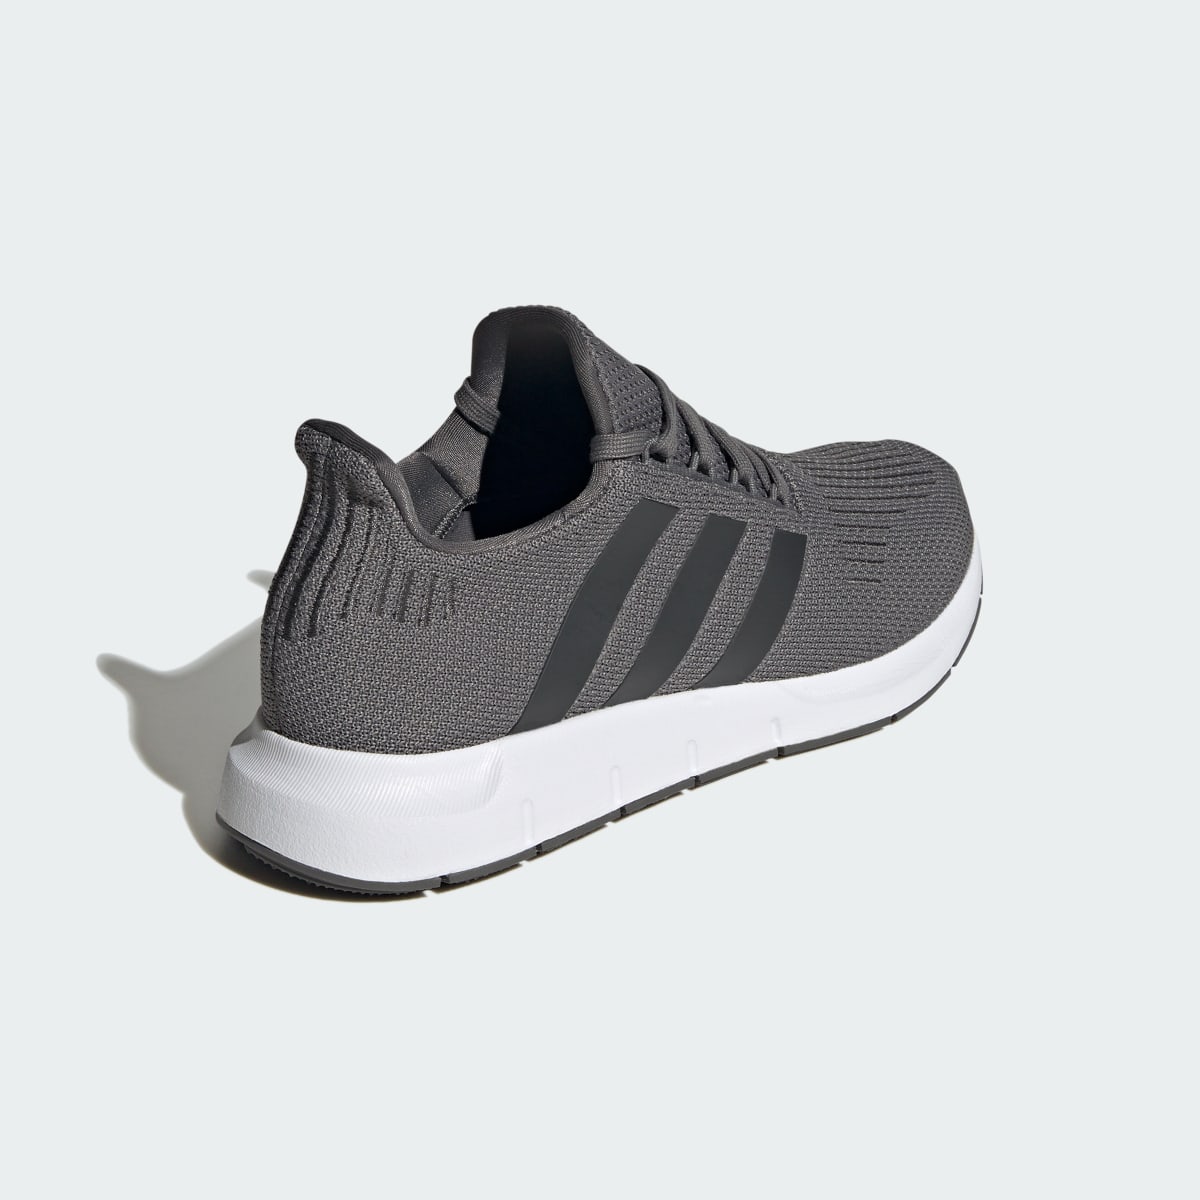 Adidas Swift Run 1.0 Shoes. 6